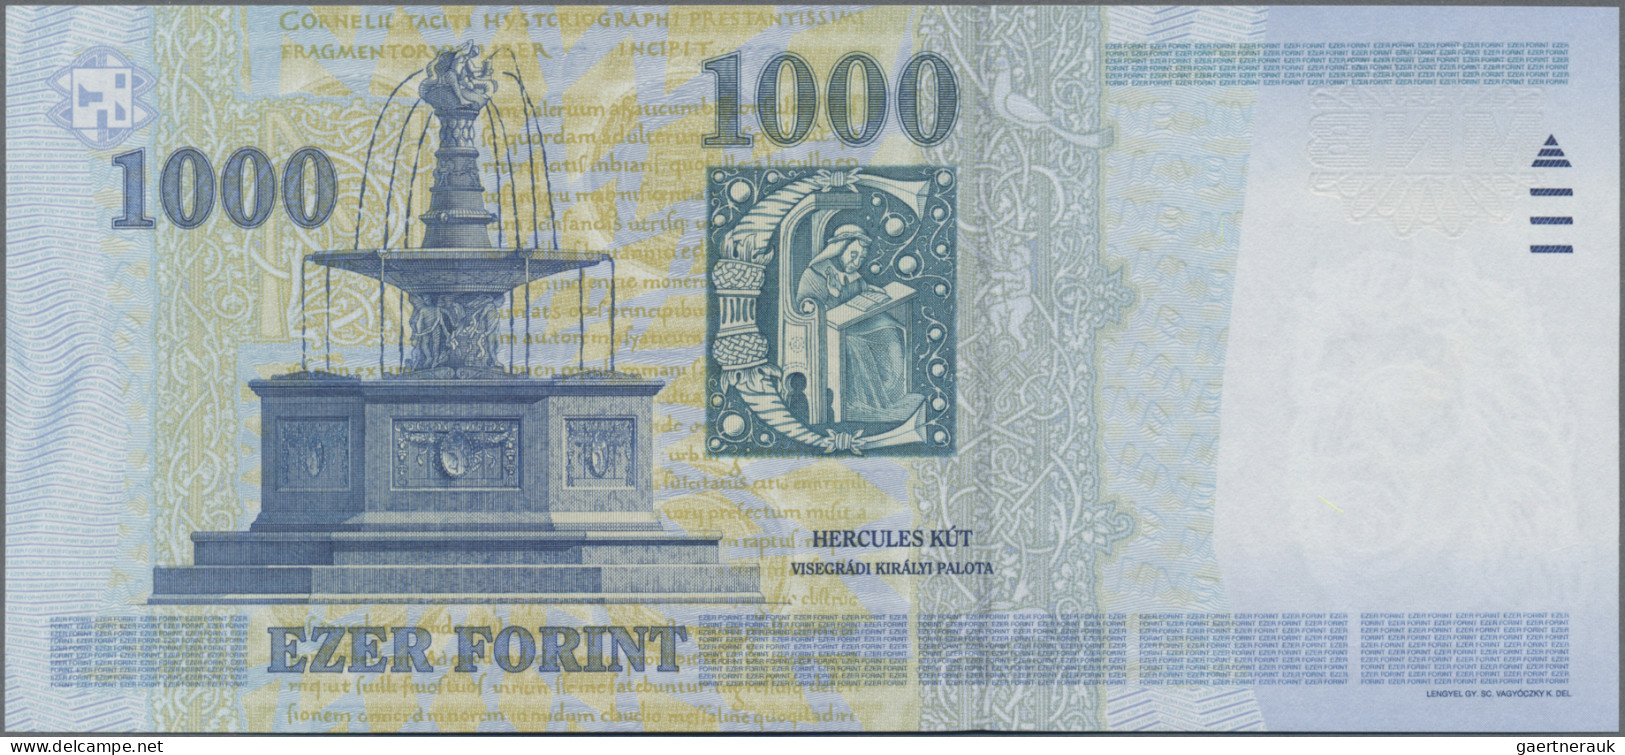 Hungary: Magyar Nemzeti Bank, Pair With 1.000- And 2.000-Forint Millennium Issue - Hungary